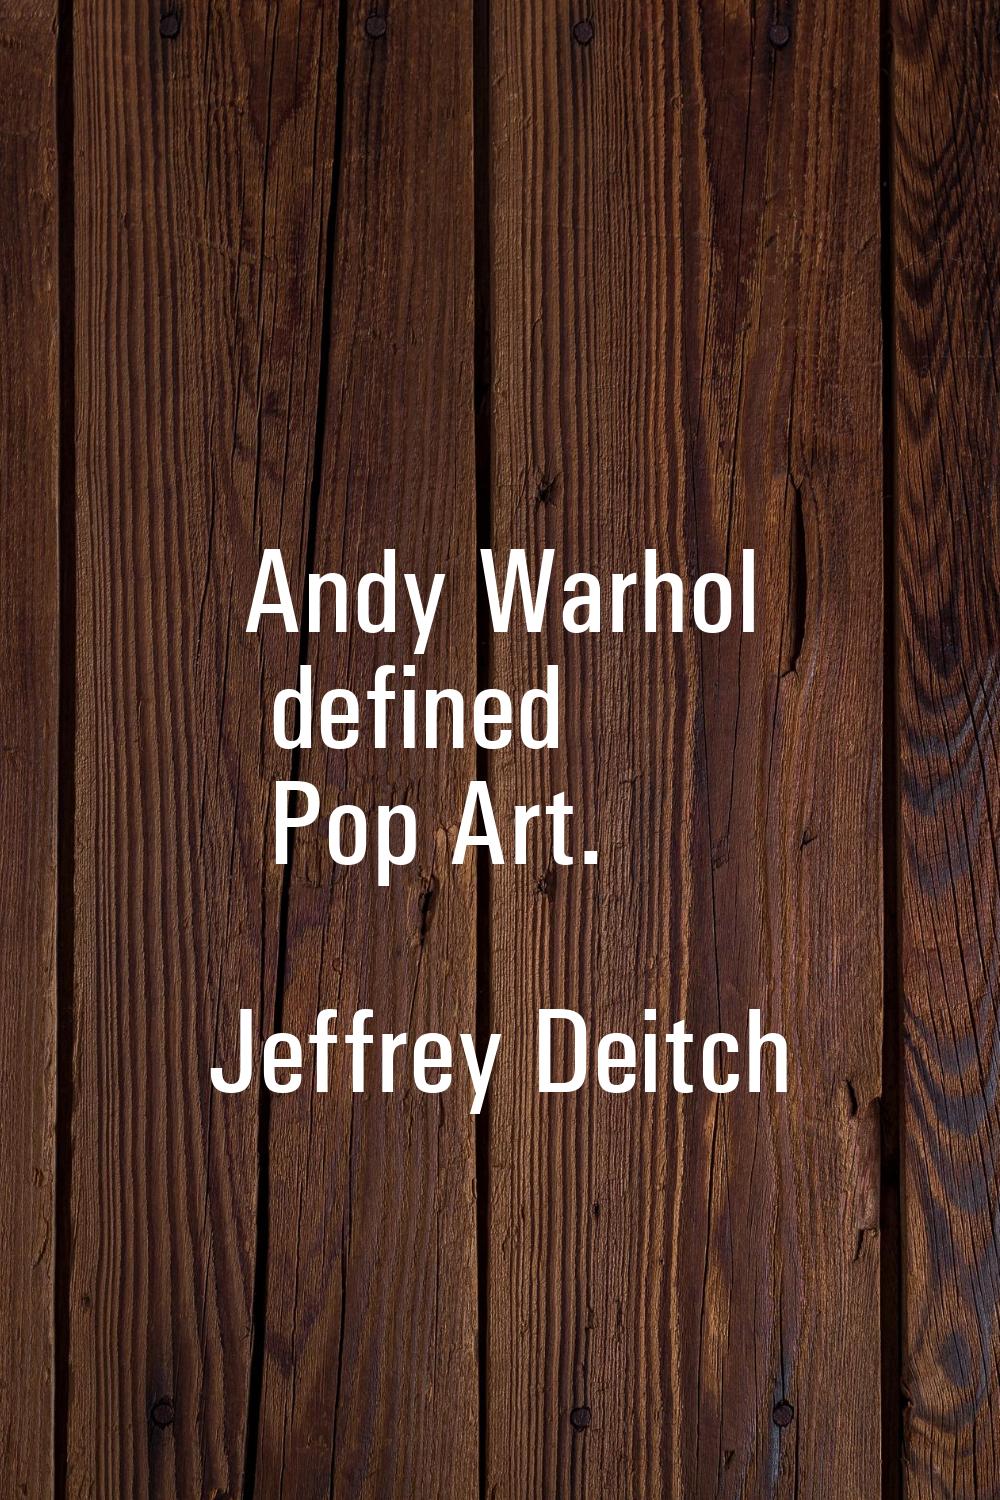 Andy Warhol defined Pop Art.